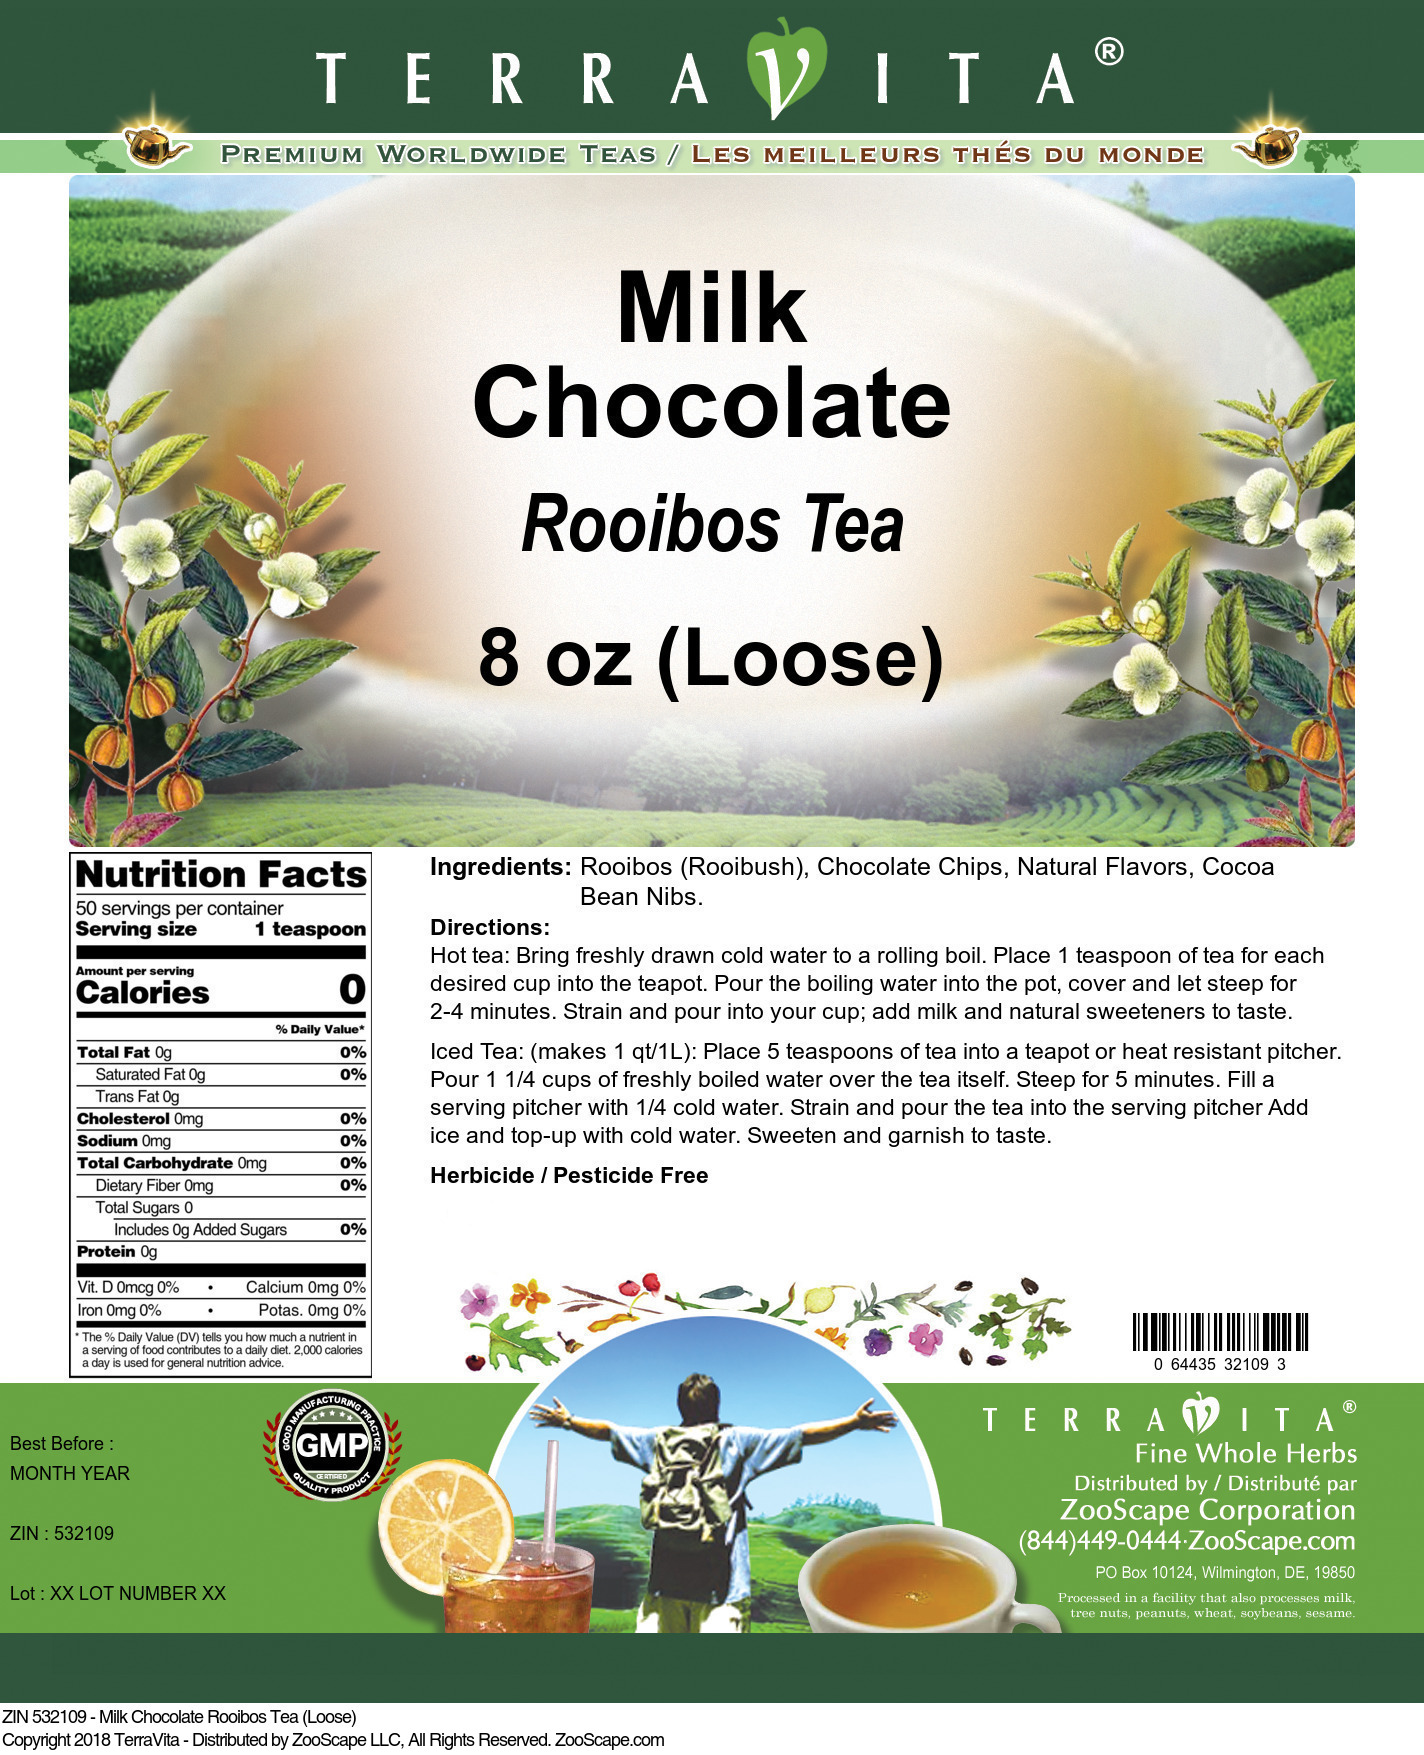 Milk Chocolate Rooibos Tea (Loose) - Label